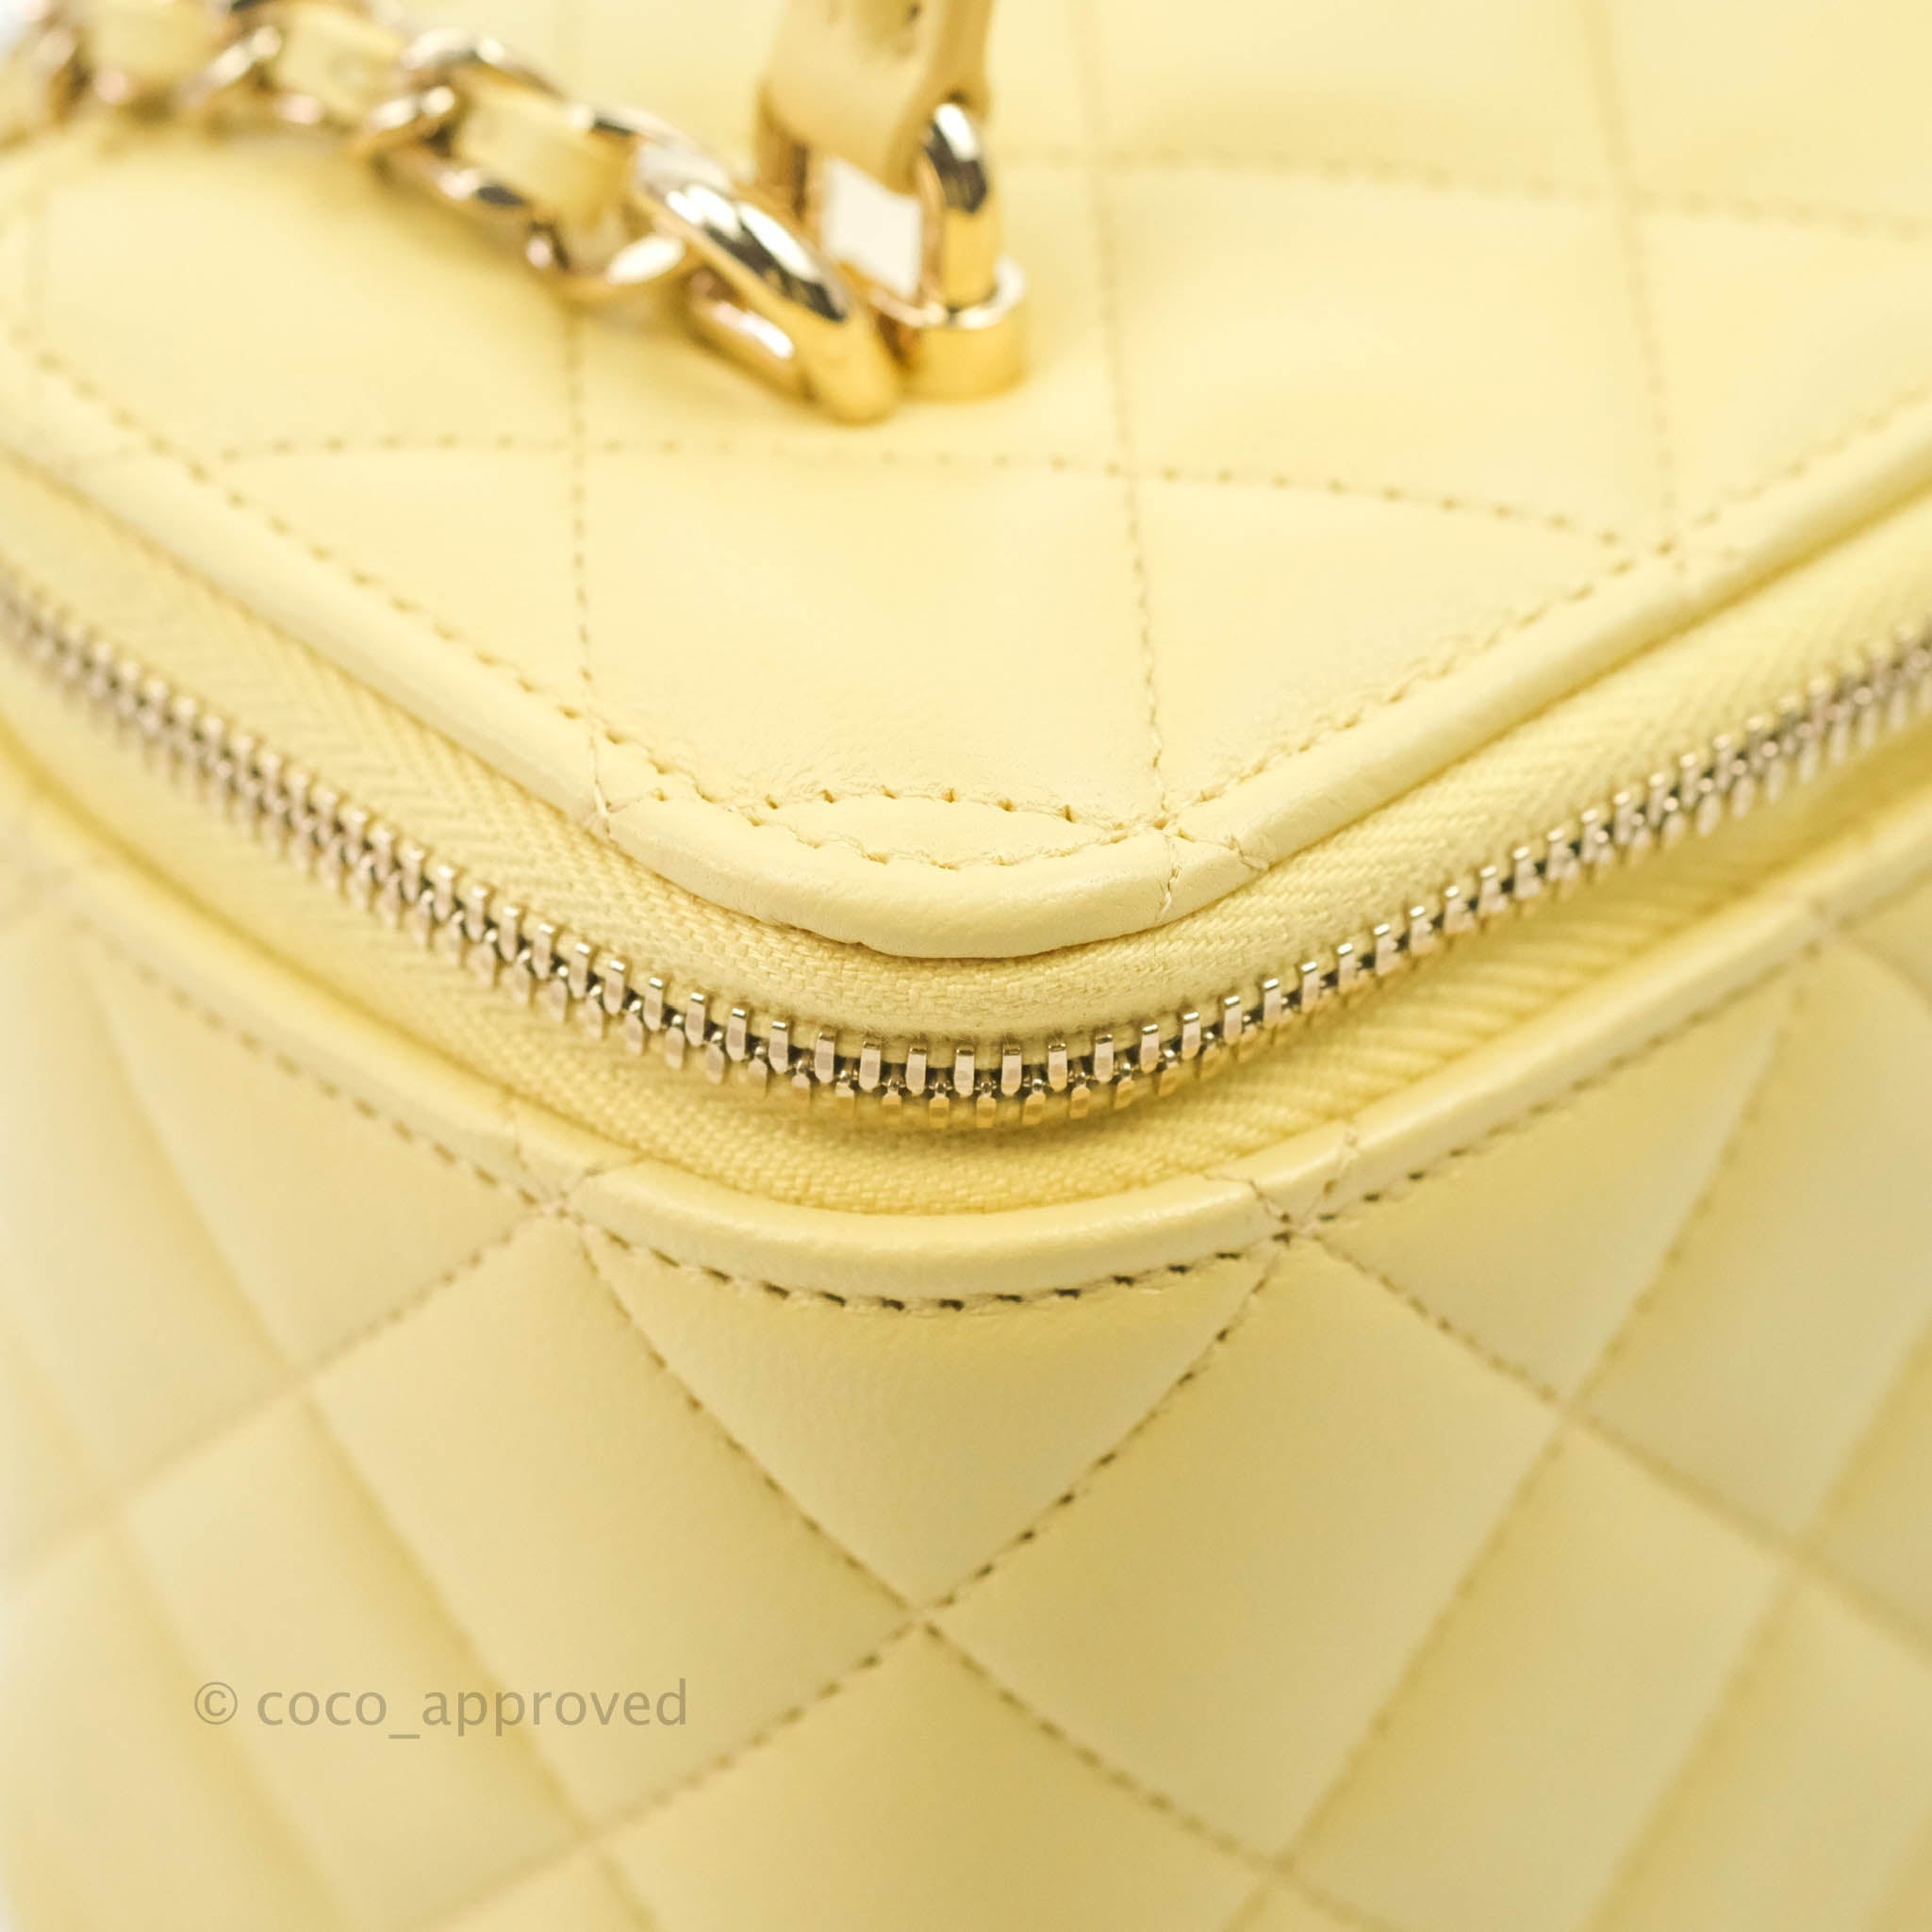 Chanel Vanity Rectangular Top Handle Yellow Lambskin Gold Hardware